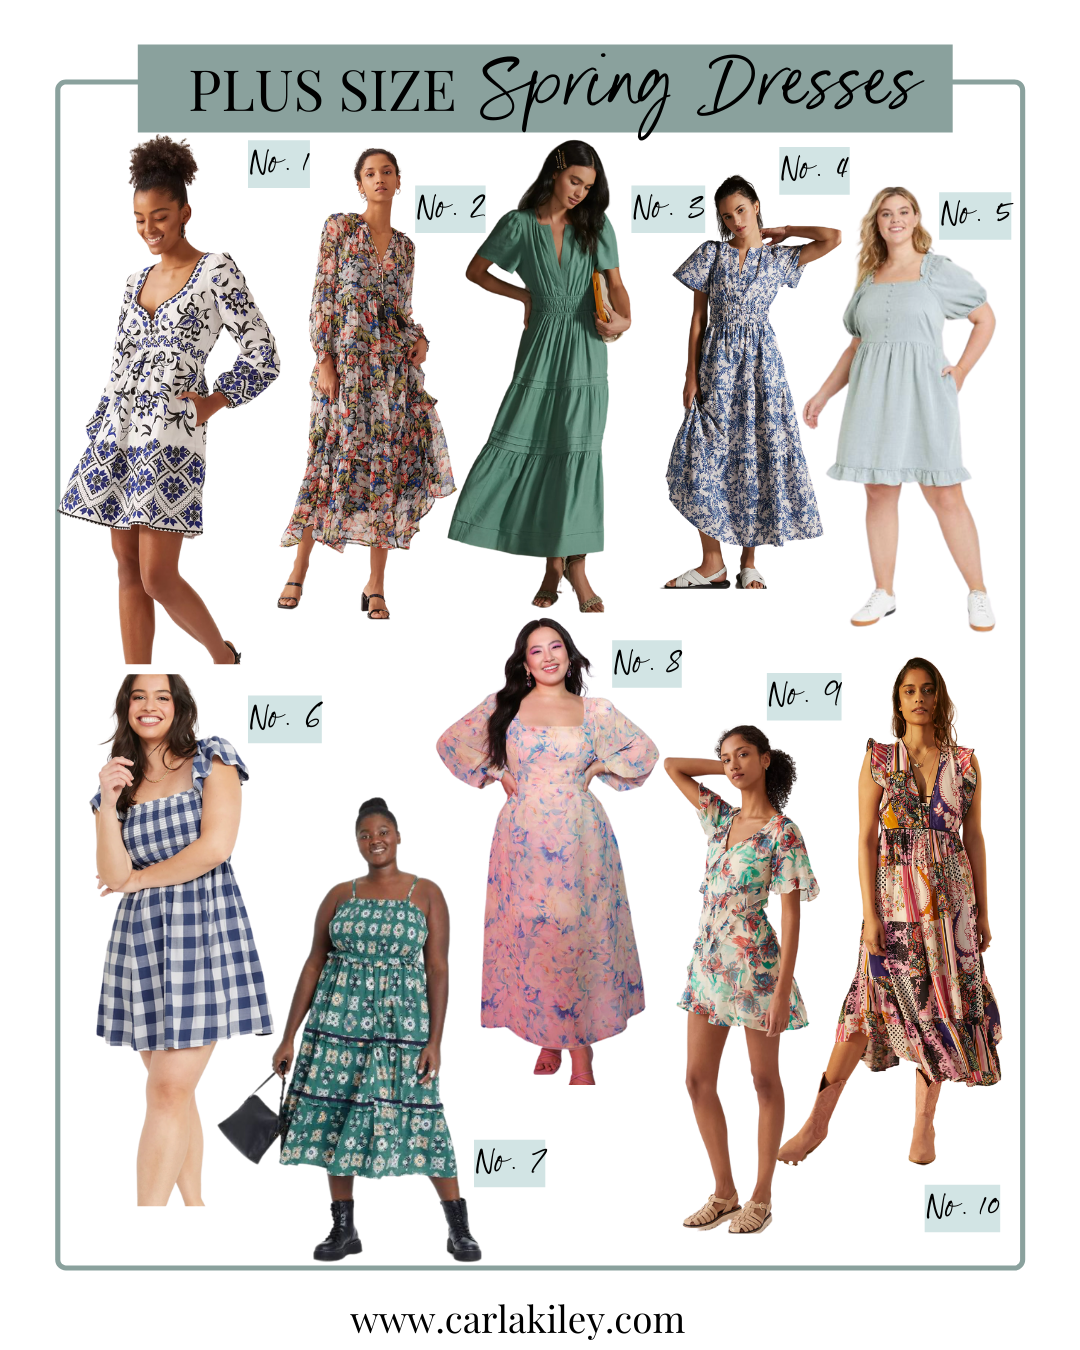 10 Plus Size Spring Dresses - www.carlakiley.com